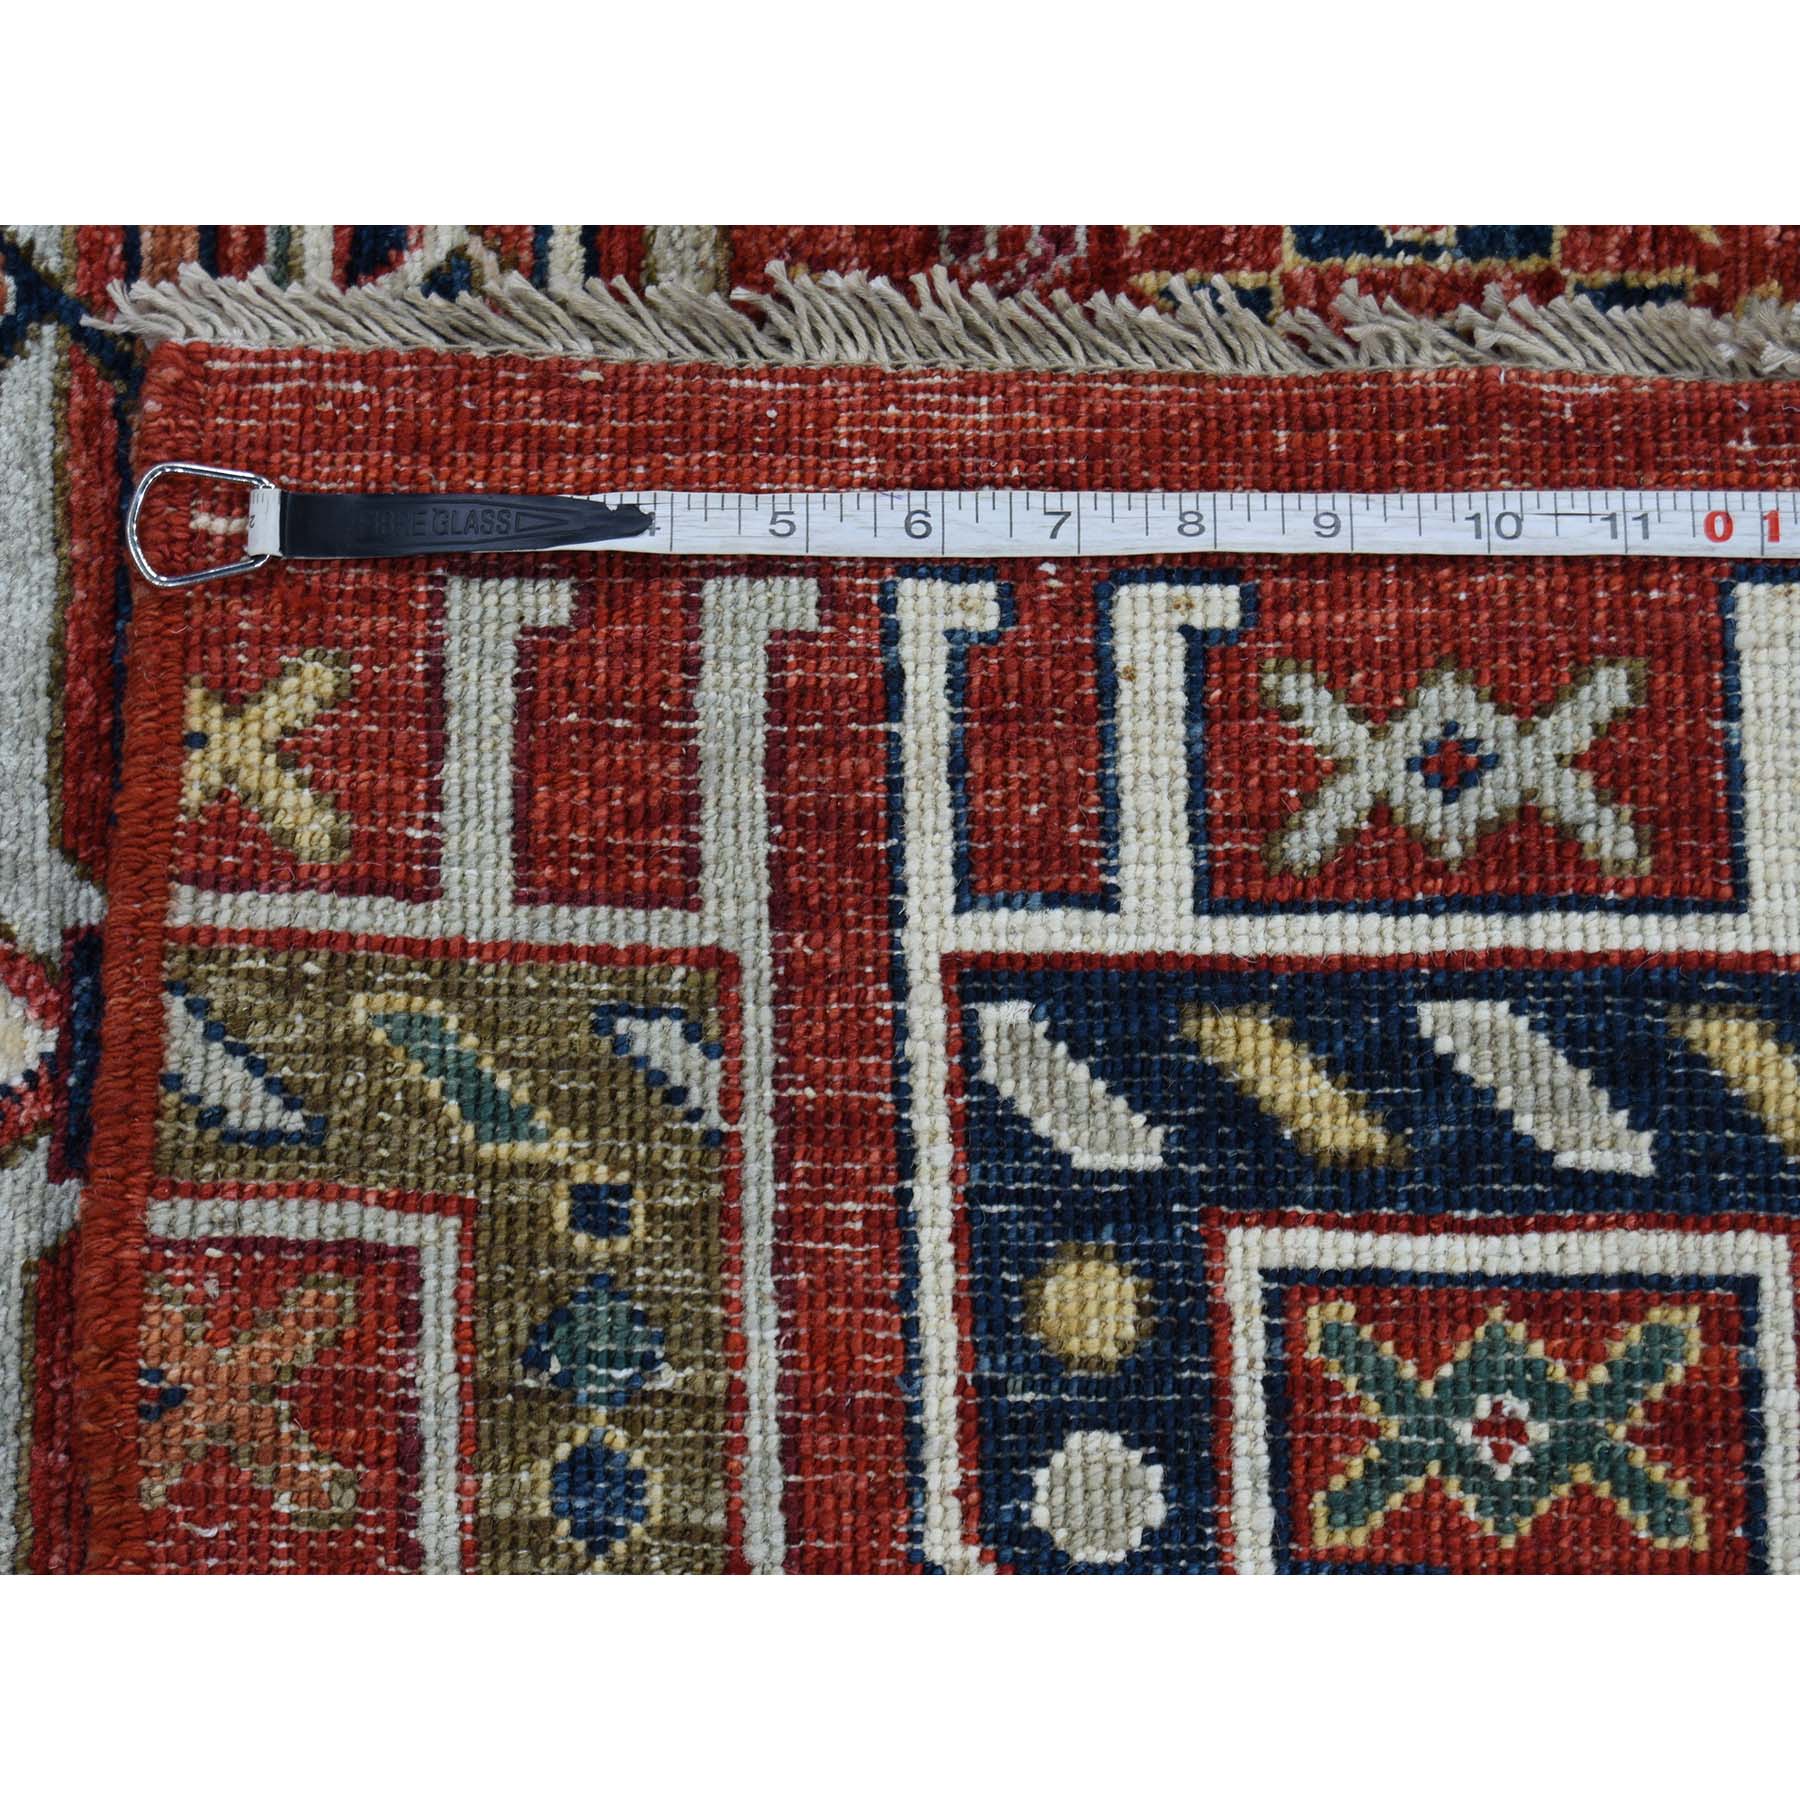 10-2 x13-8  Akstafa Design Antiqued Caucasian Hand-Knotted Pure Wool Oriental Rug 